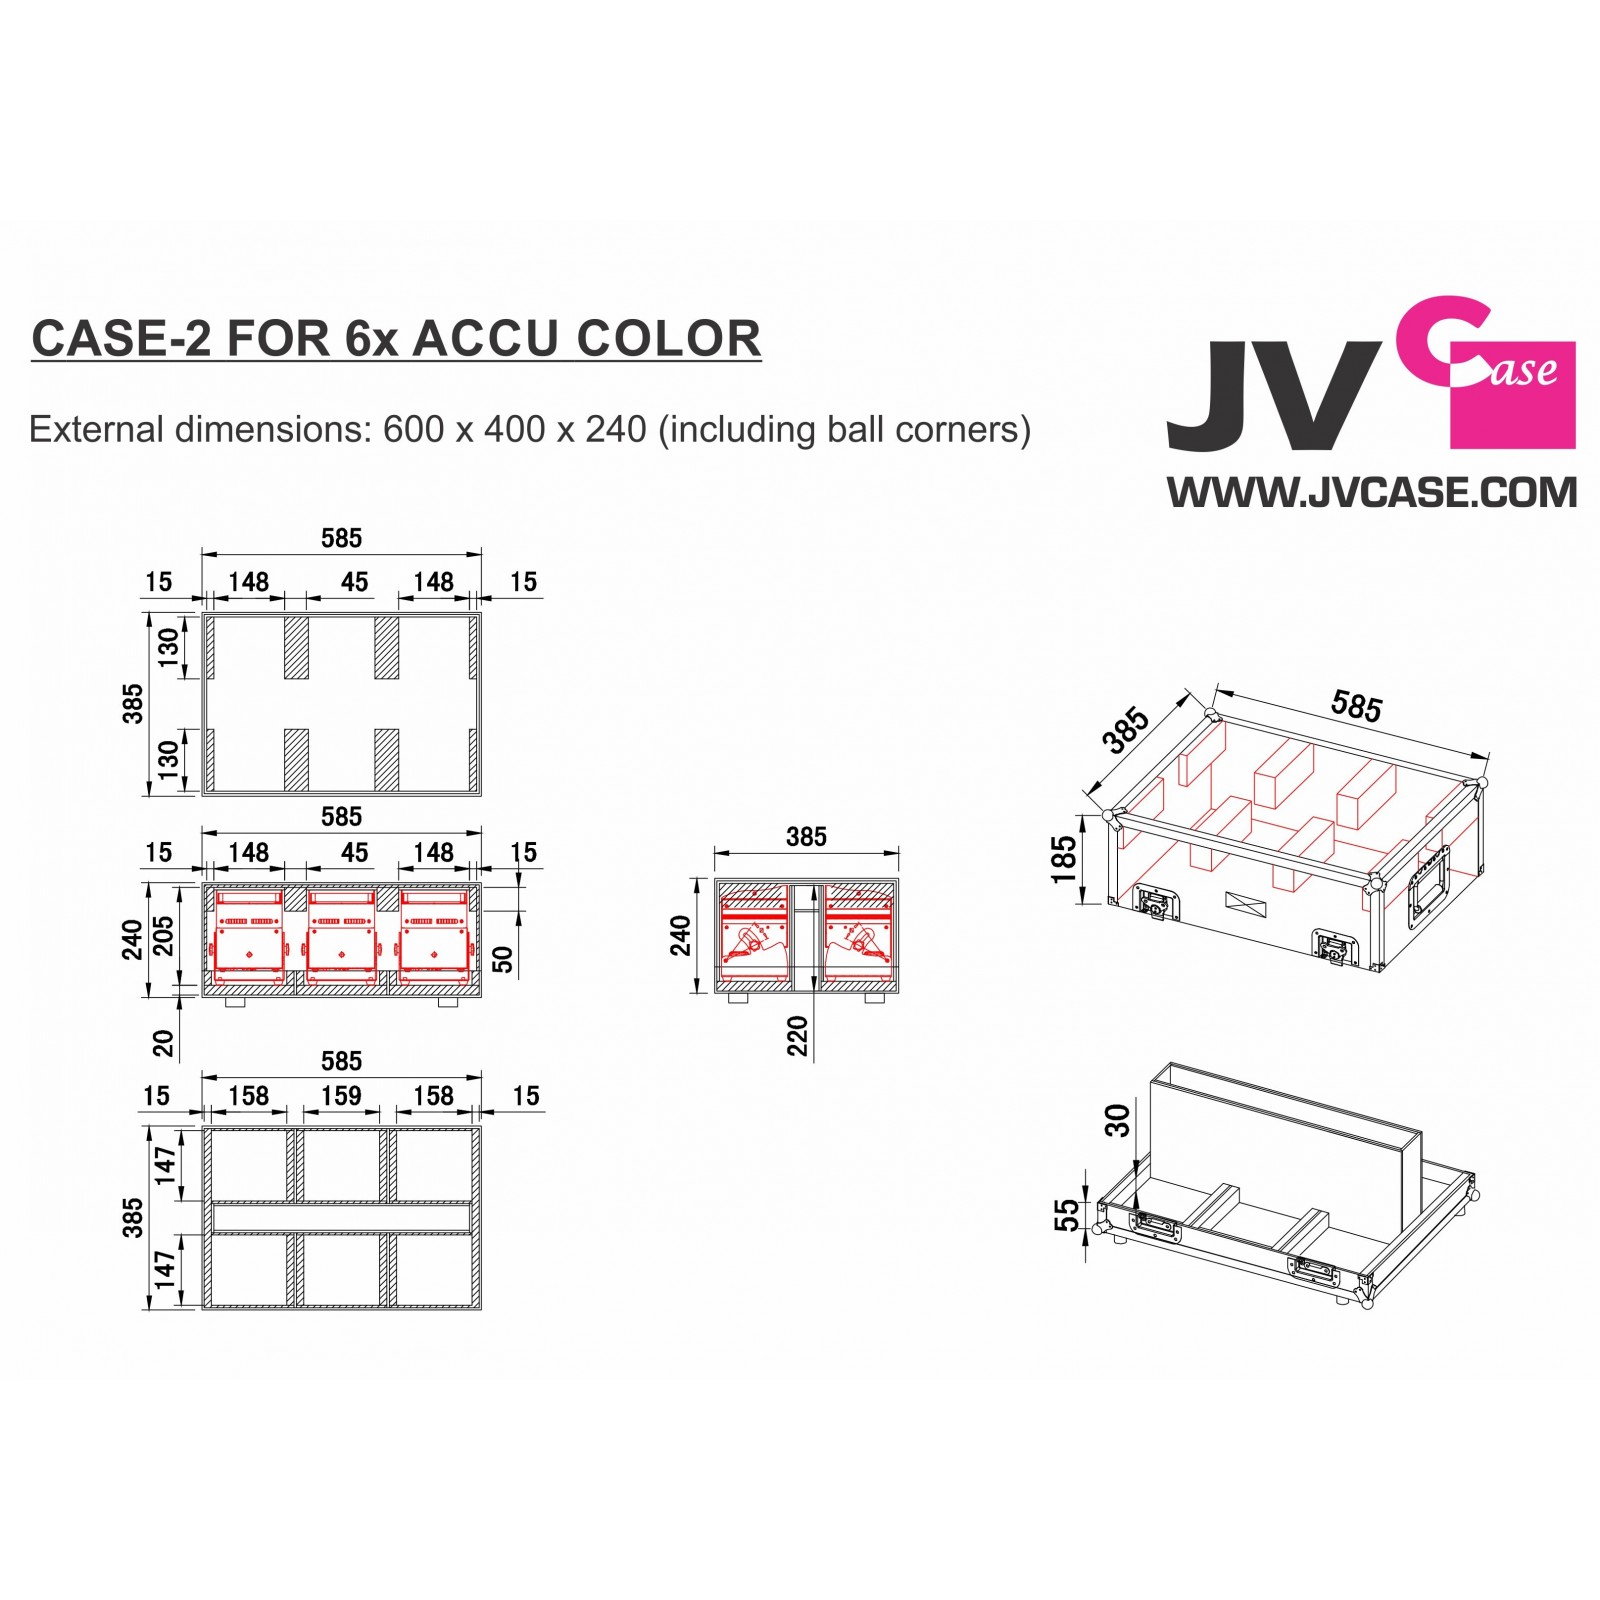 Verleiden Gemaakt om te onthouden Streng JB Systems - CASE-2 for 6x ACCU COLOR